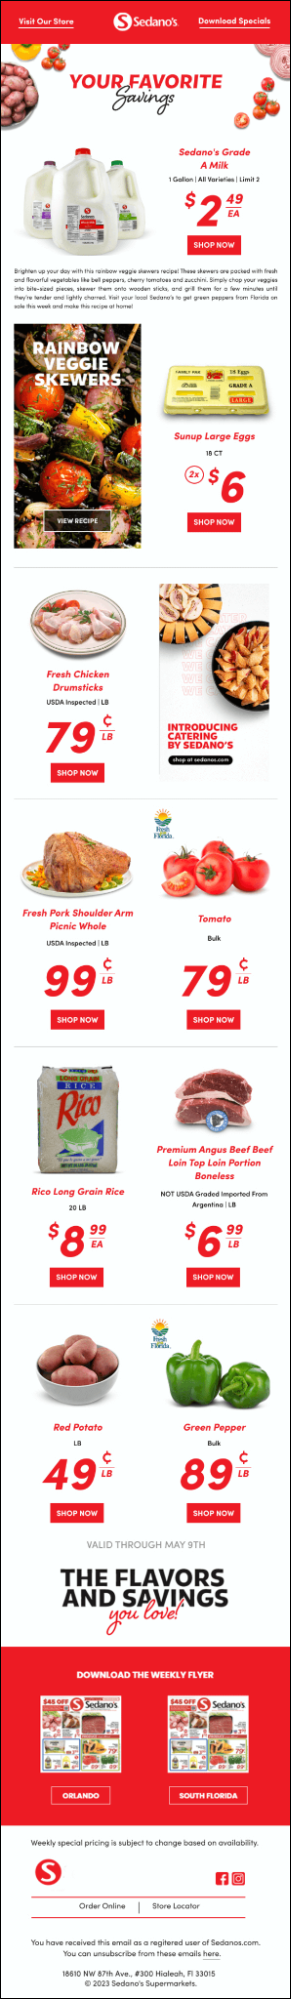 Sedano’s Supermarket email